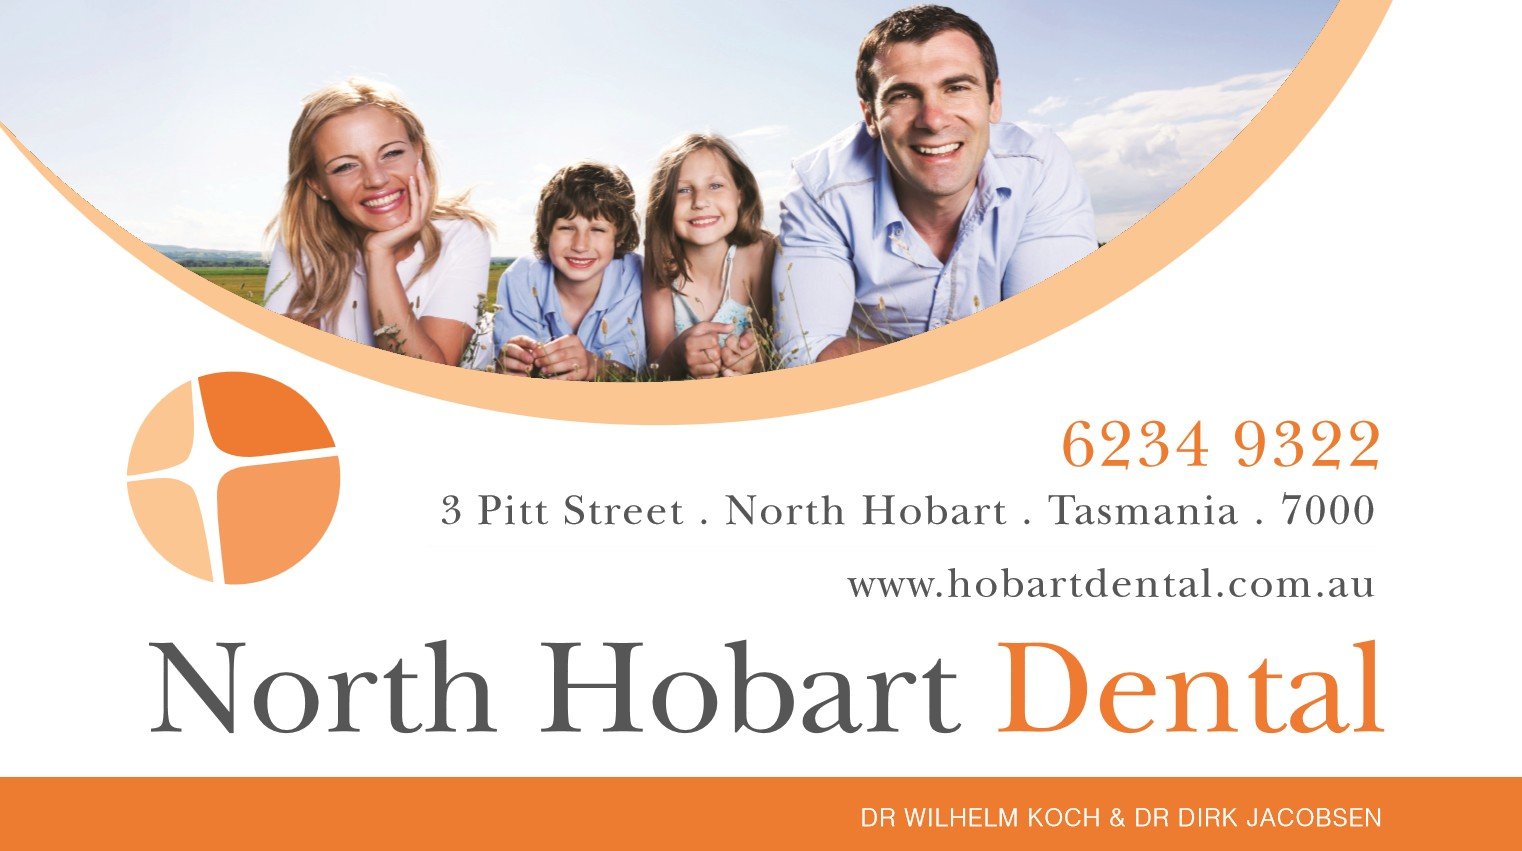 North Hobart Dental